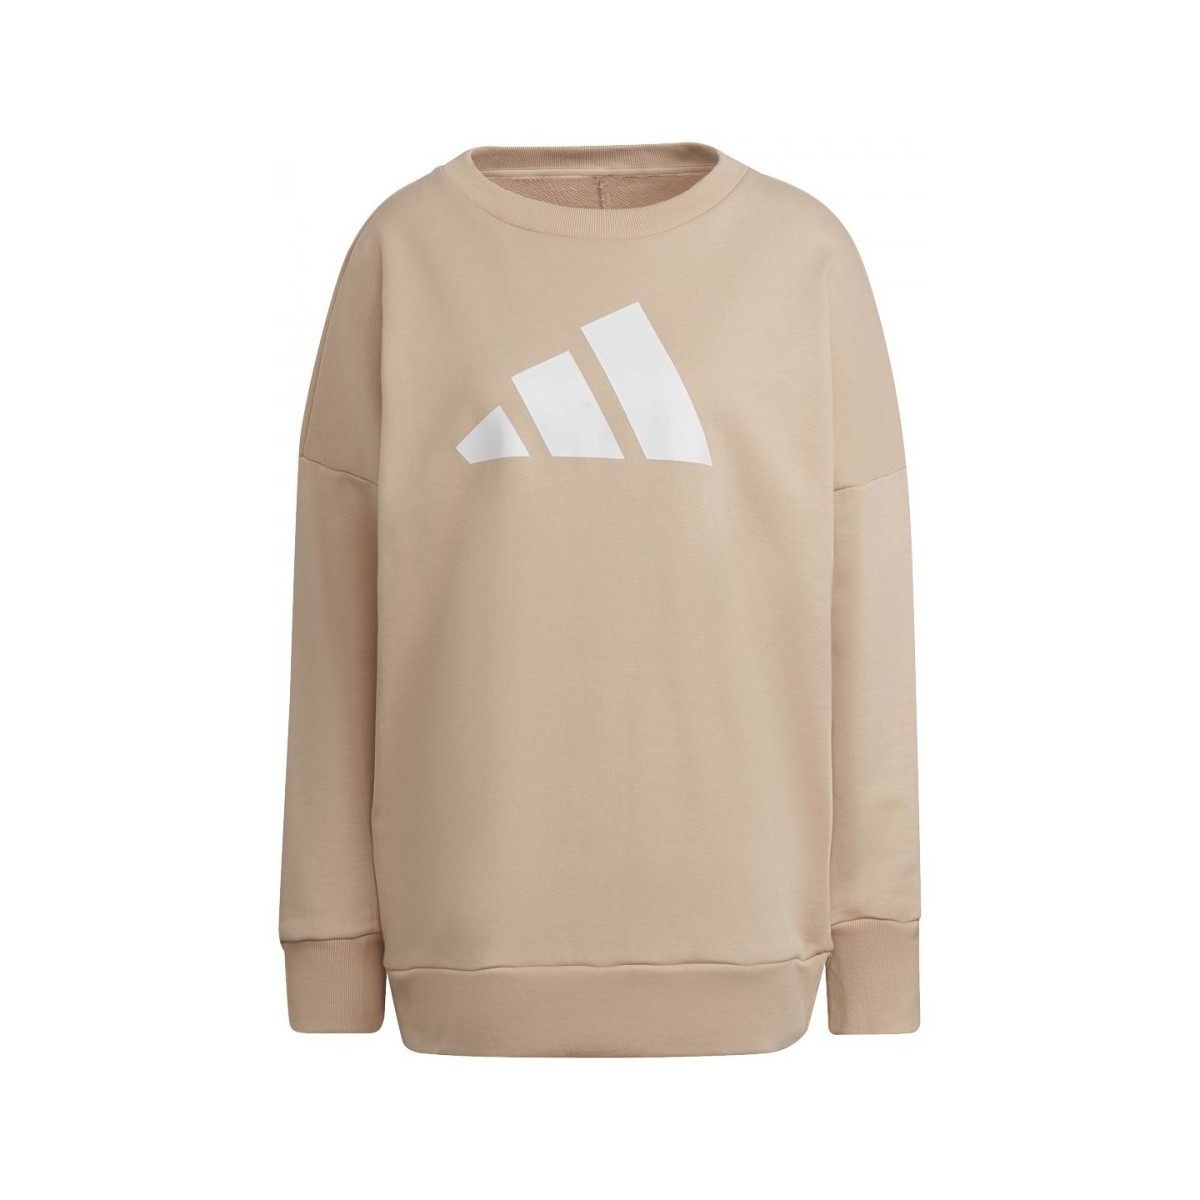 Textiel Dames Sweaters / Sweatshirts adidas Originals W Fi 3B Crew Roze